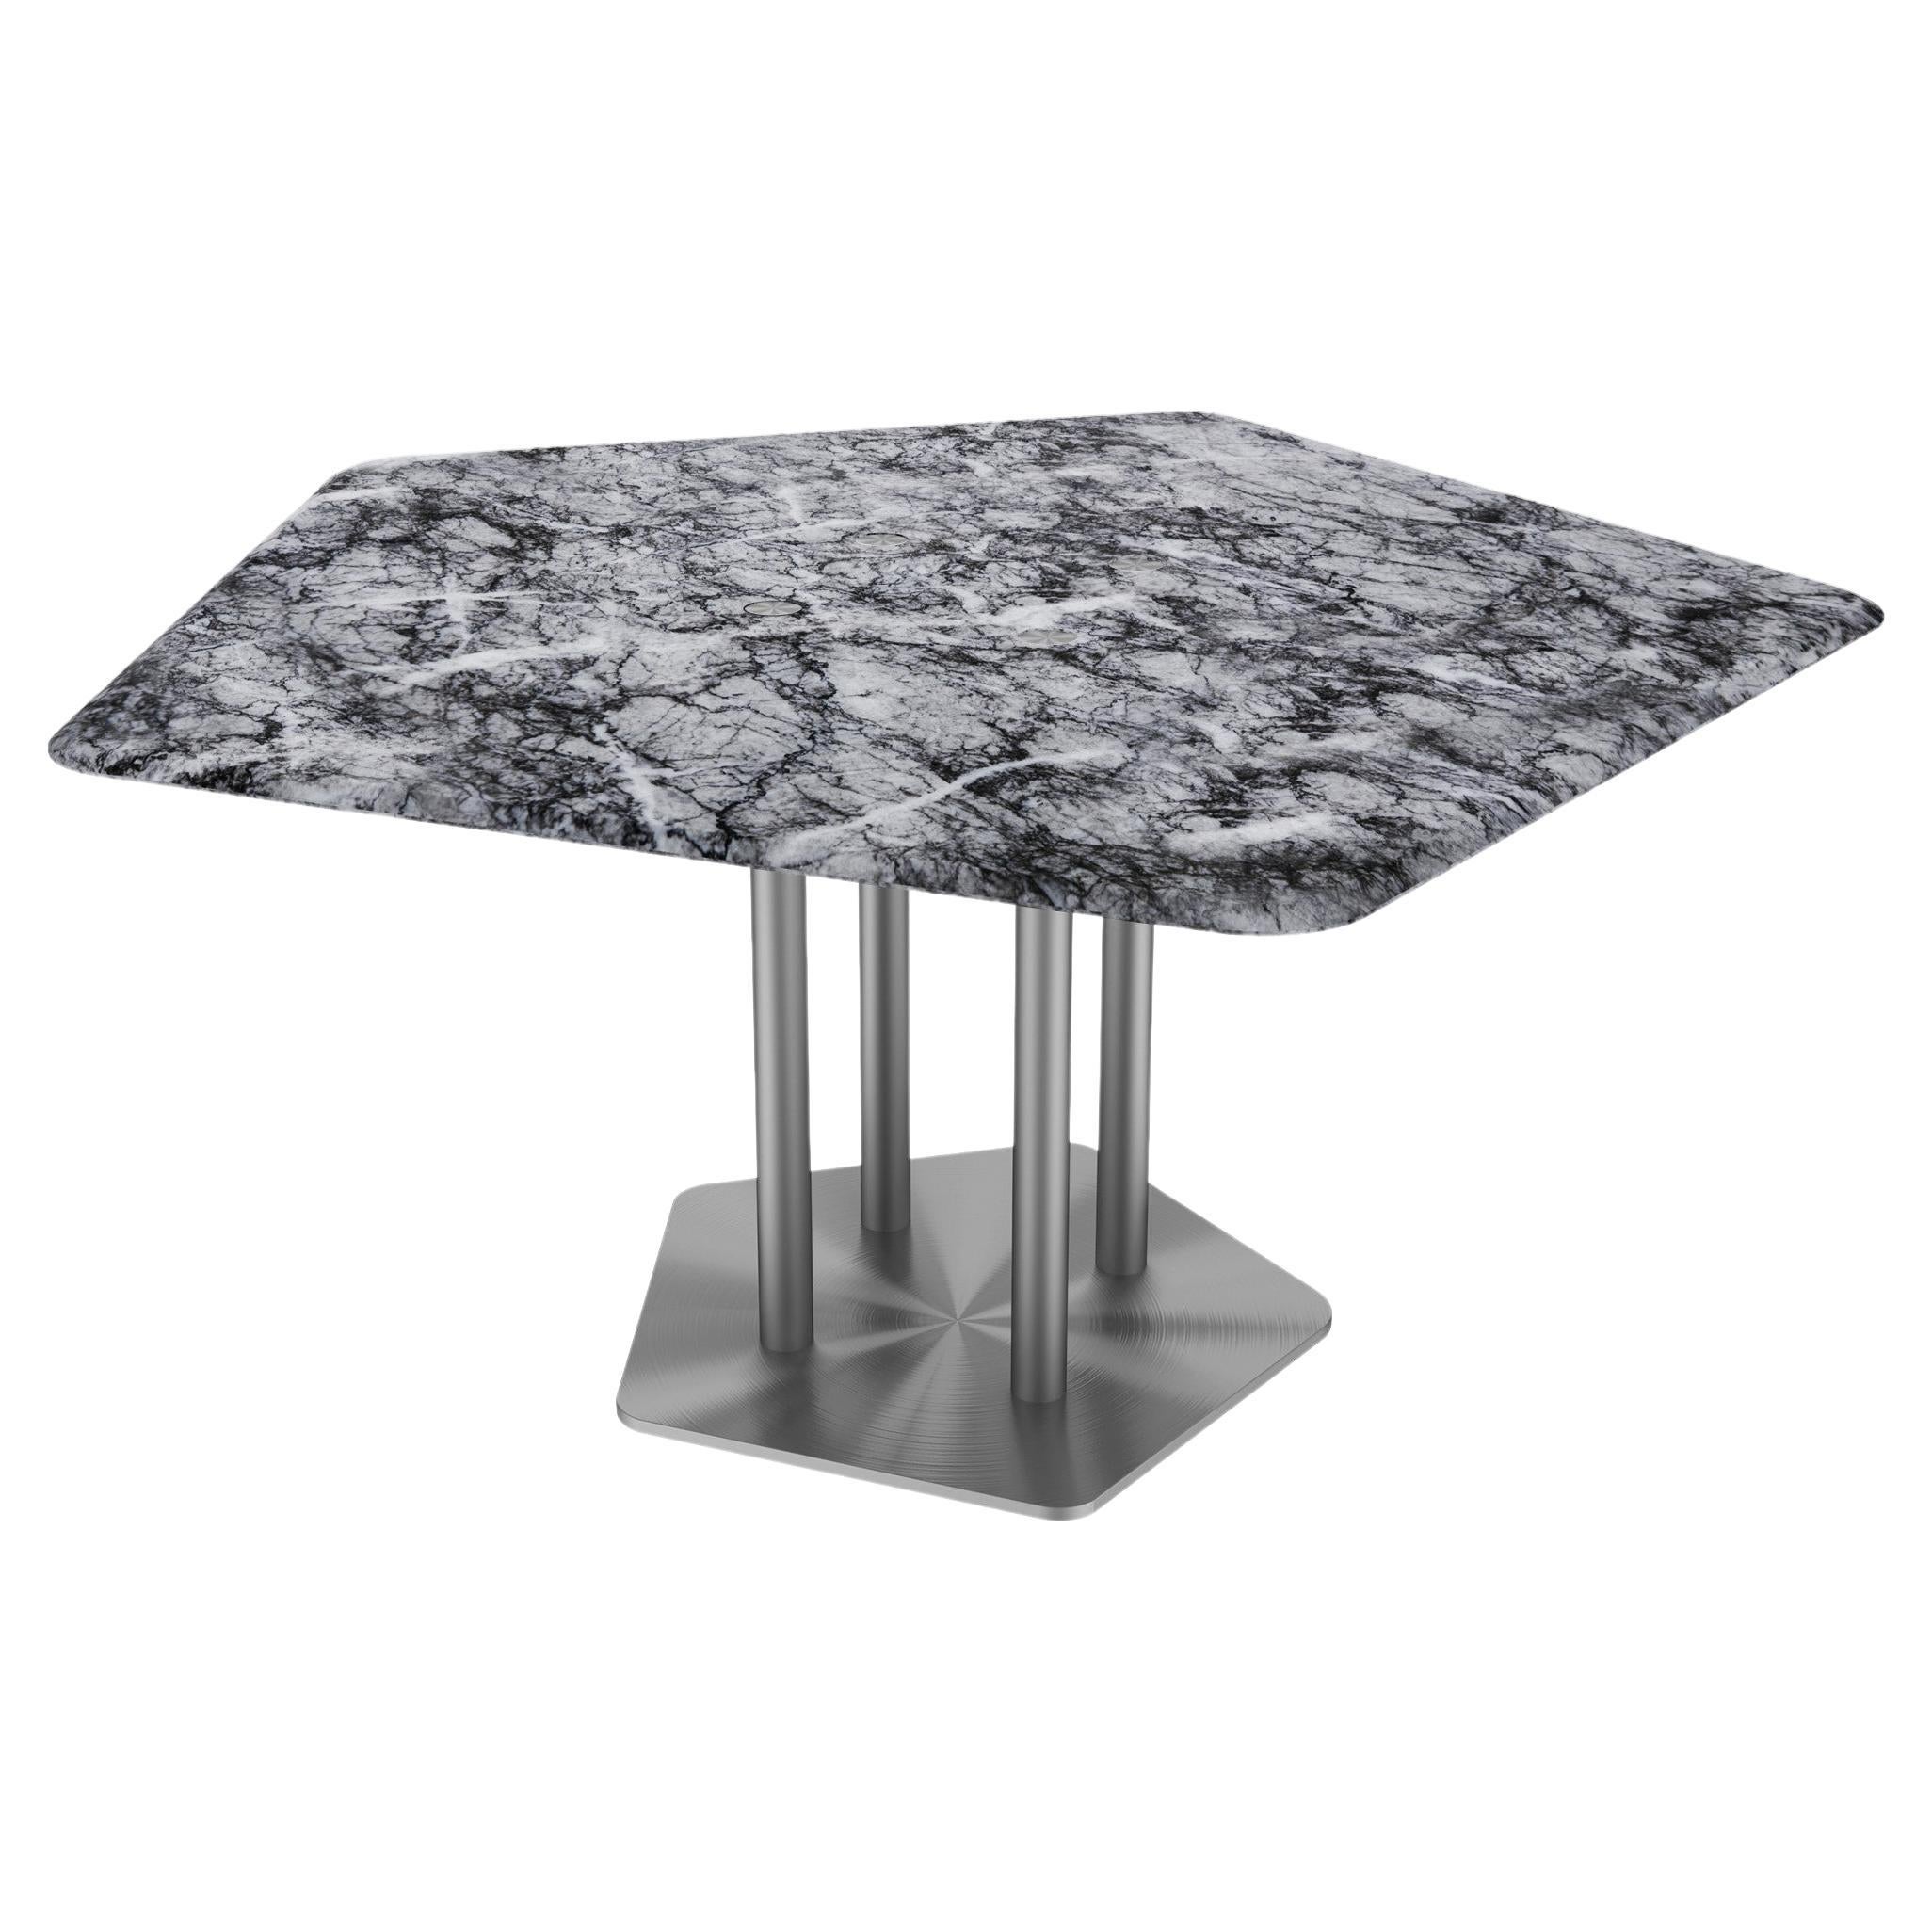 NORDST ELI Dining Table, Italian Grey Rain Marble, Danish Modern Design, New For Sale